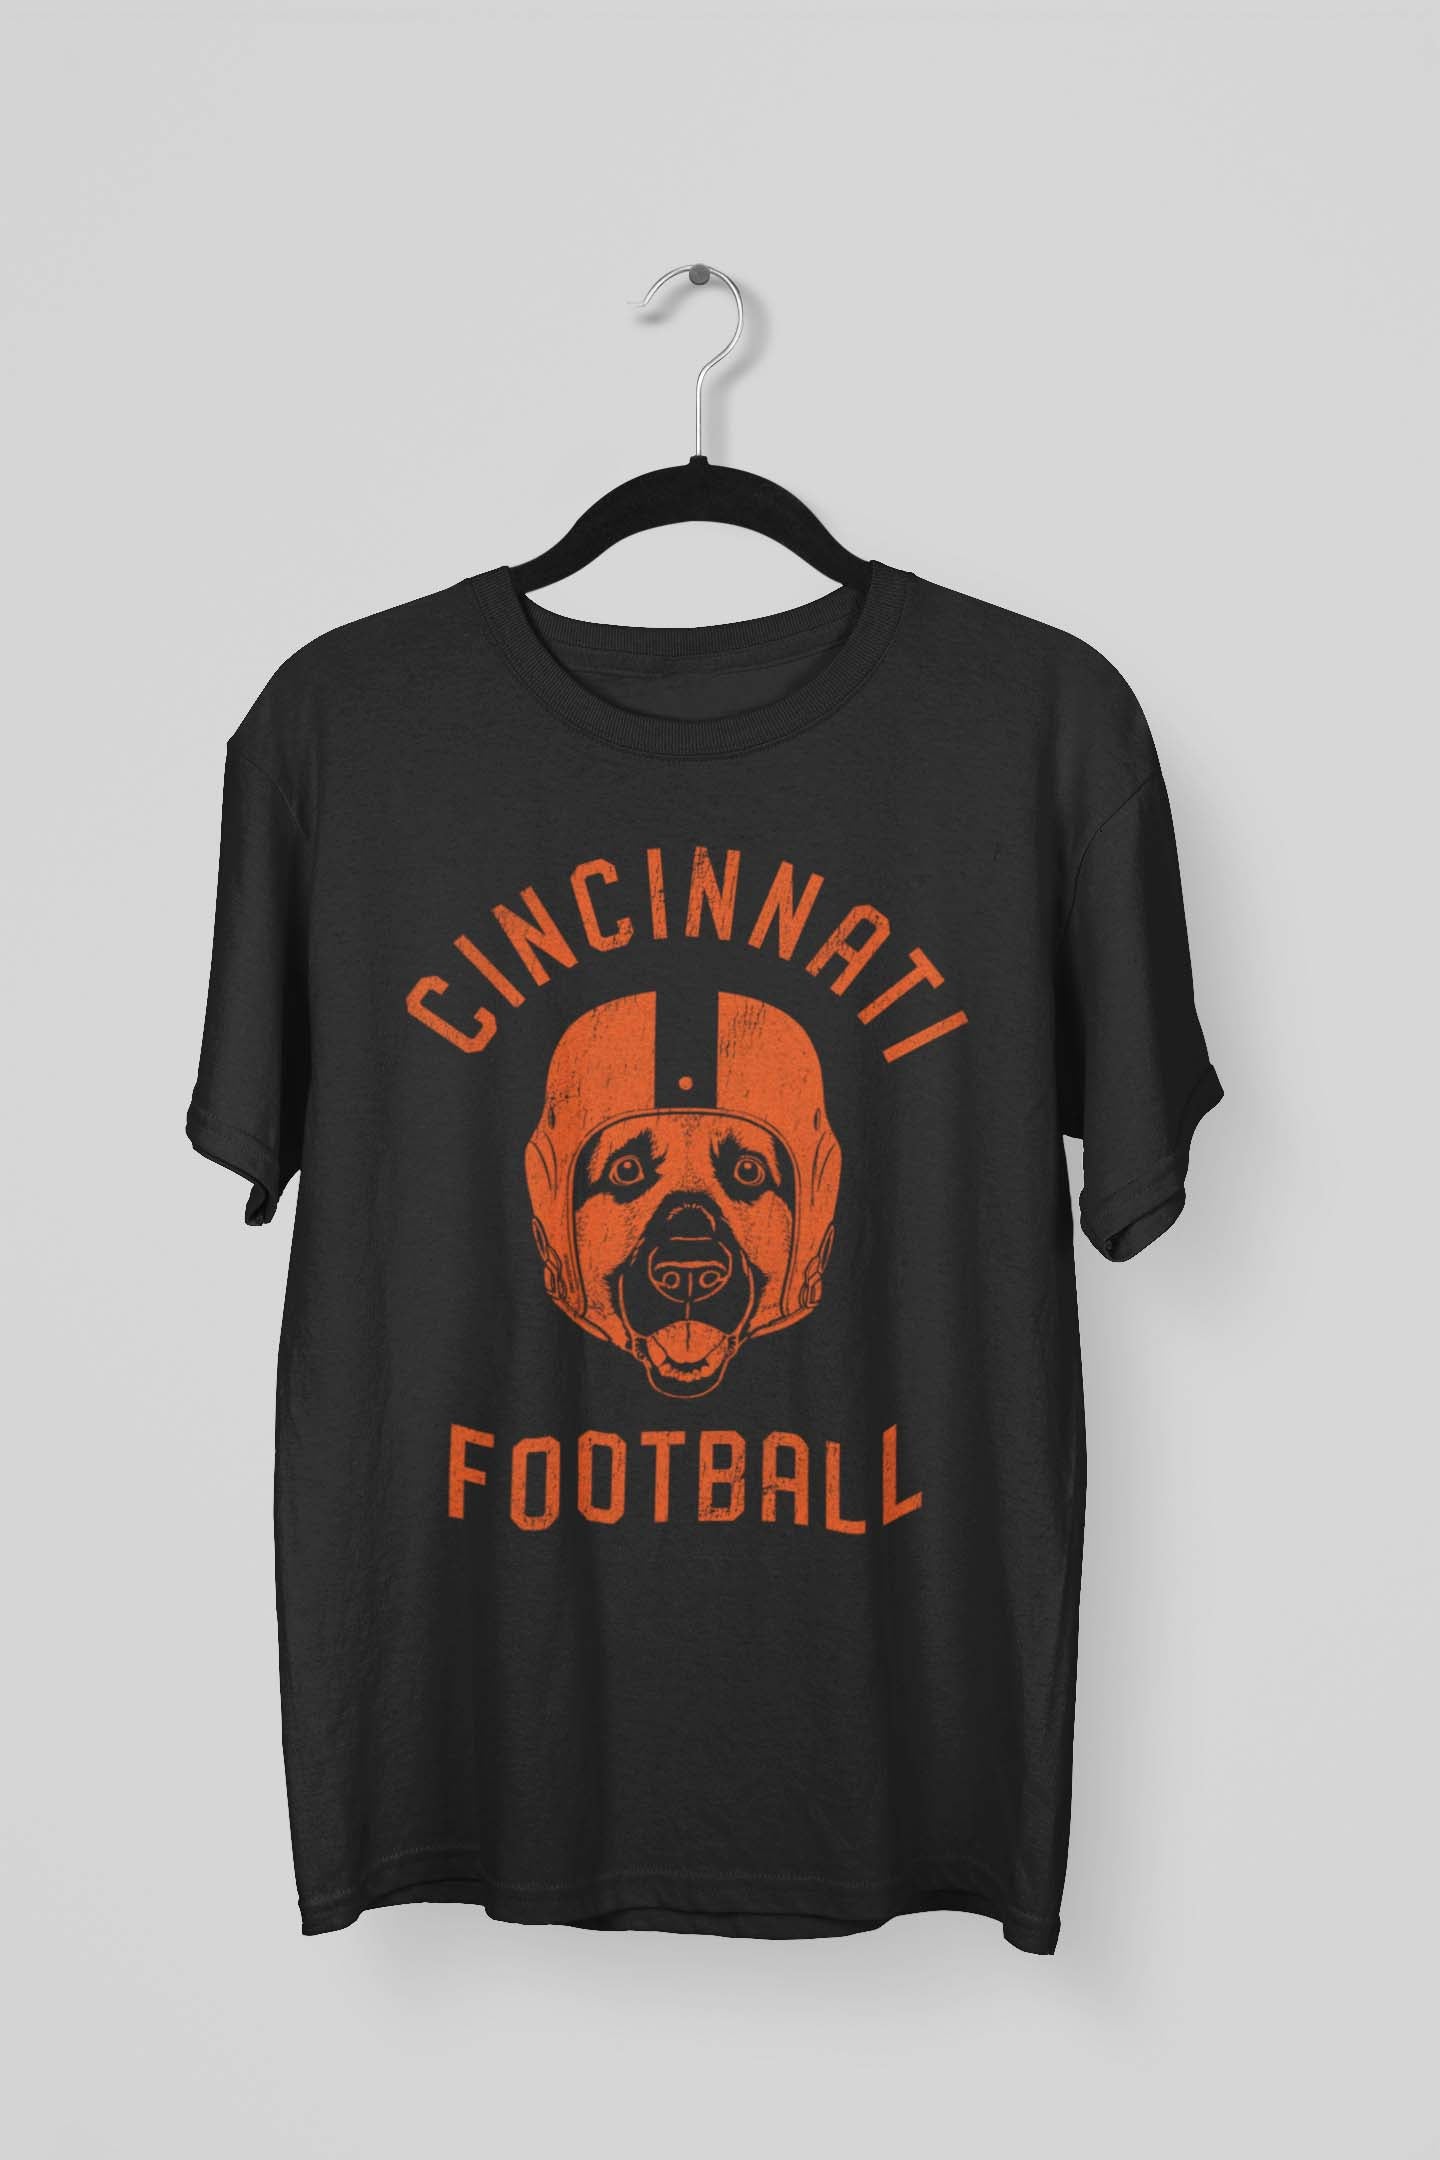 Cincinnati Football German Shepherd T-Shirt